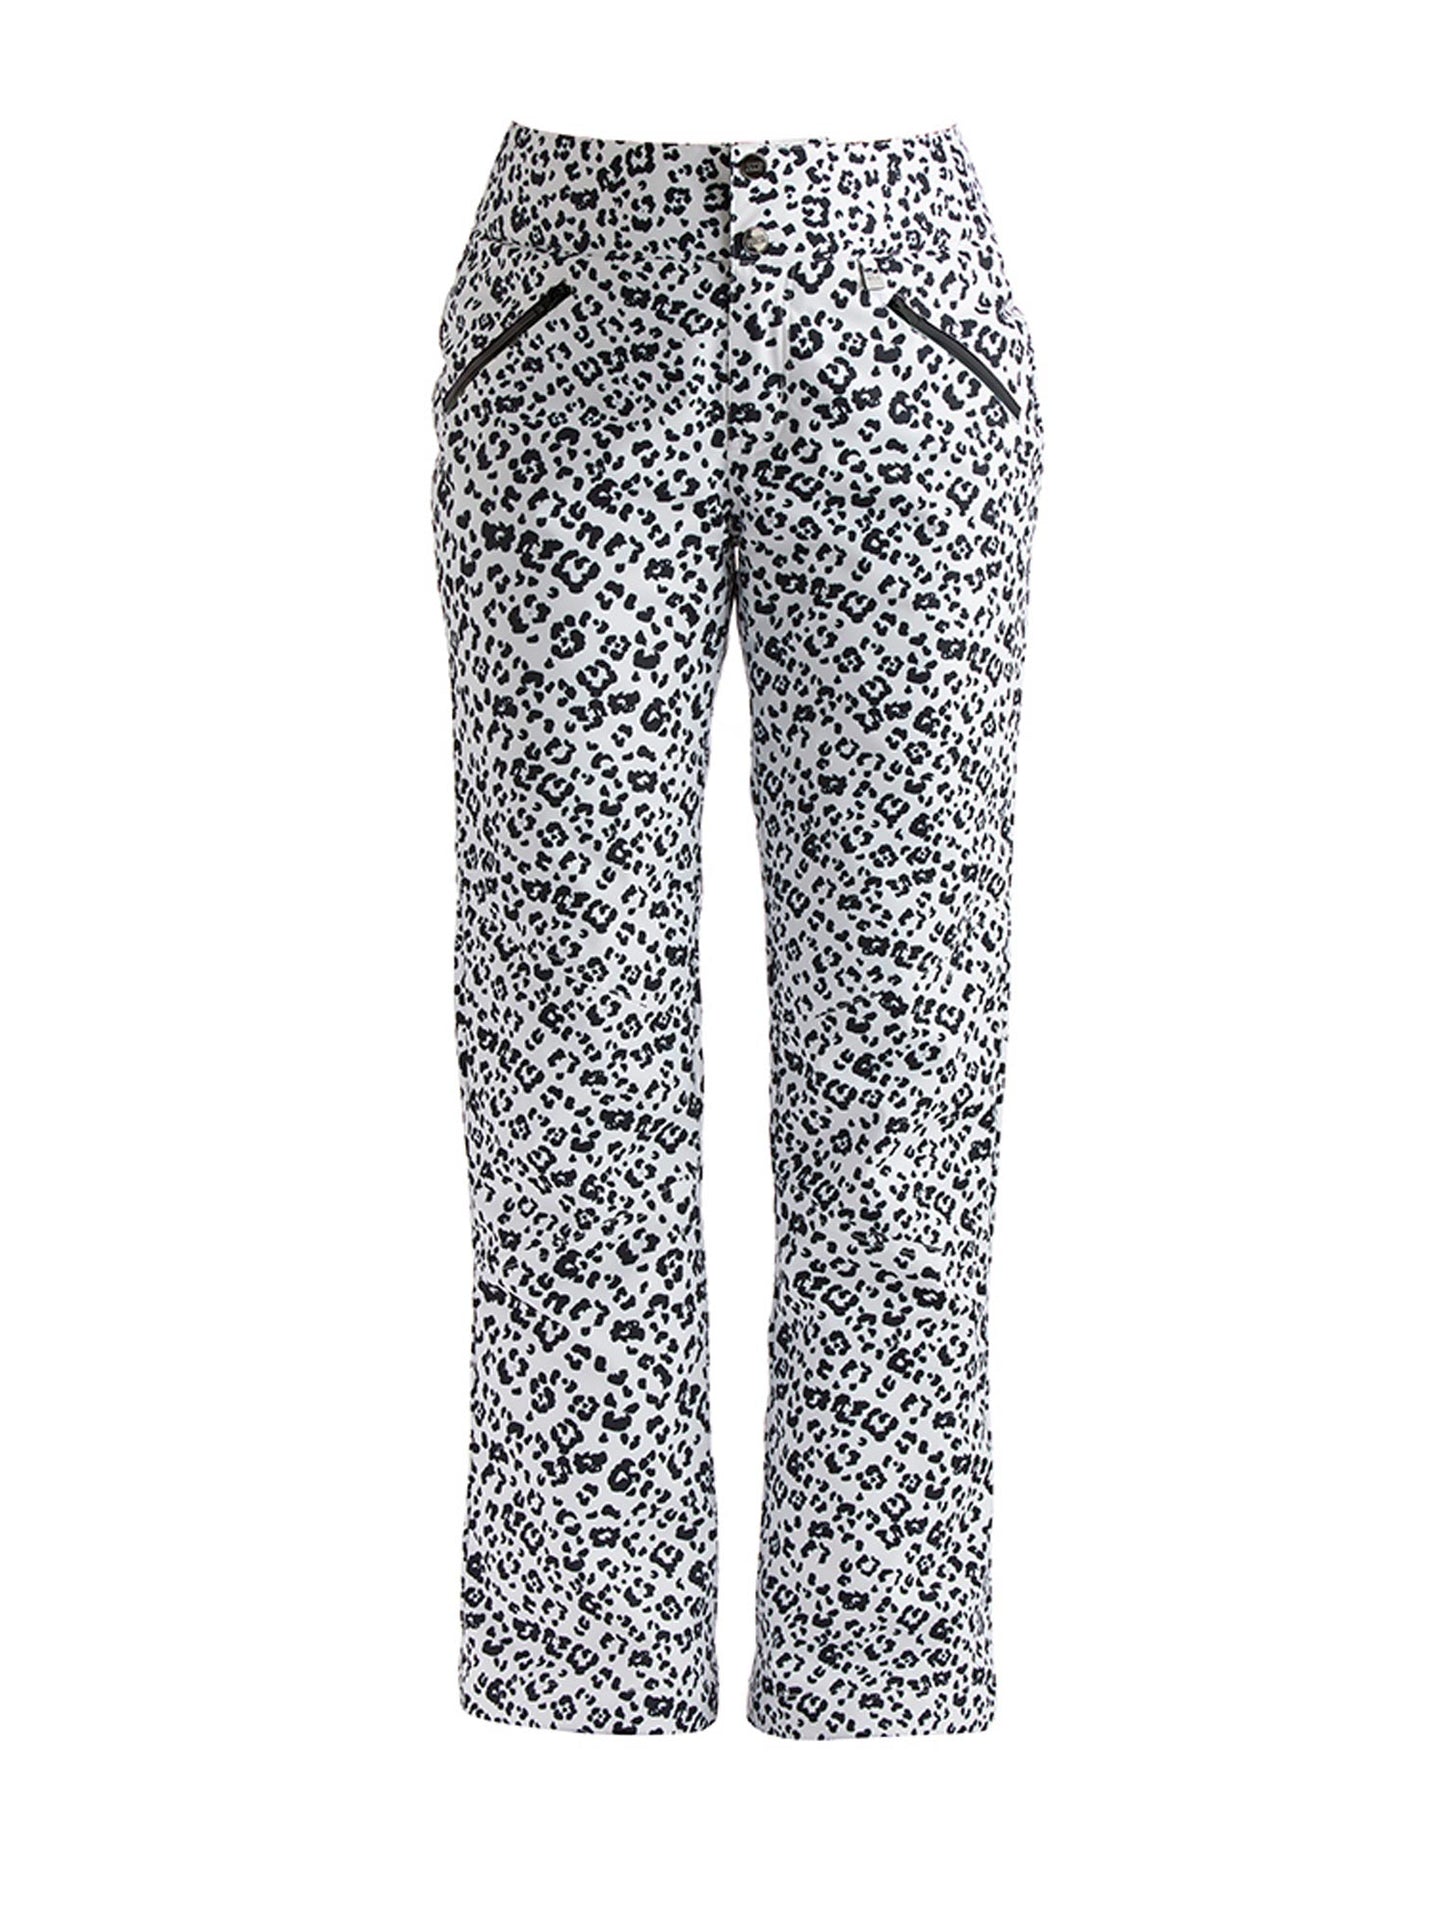 Women's Nils Hannah ski pants, white & black cheetah print